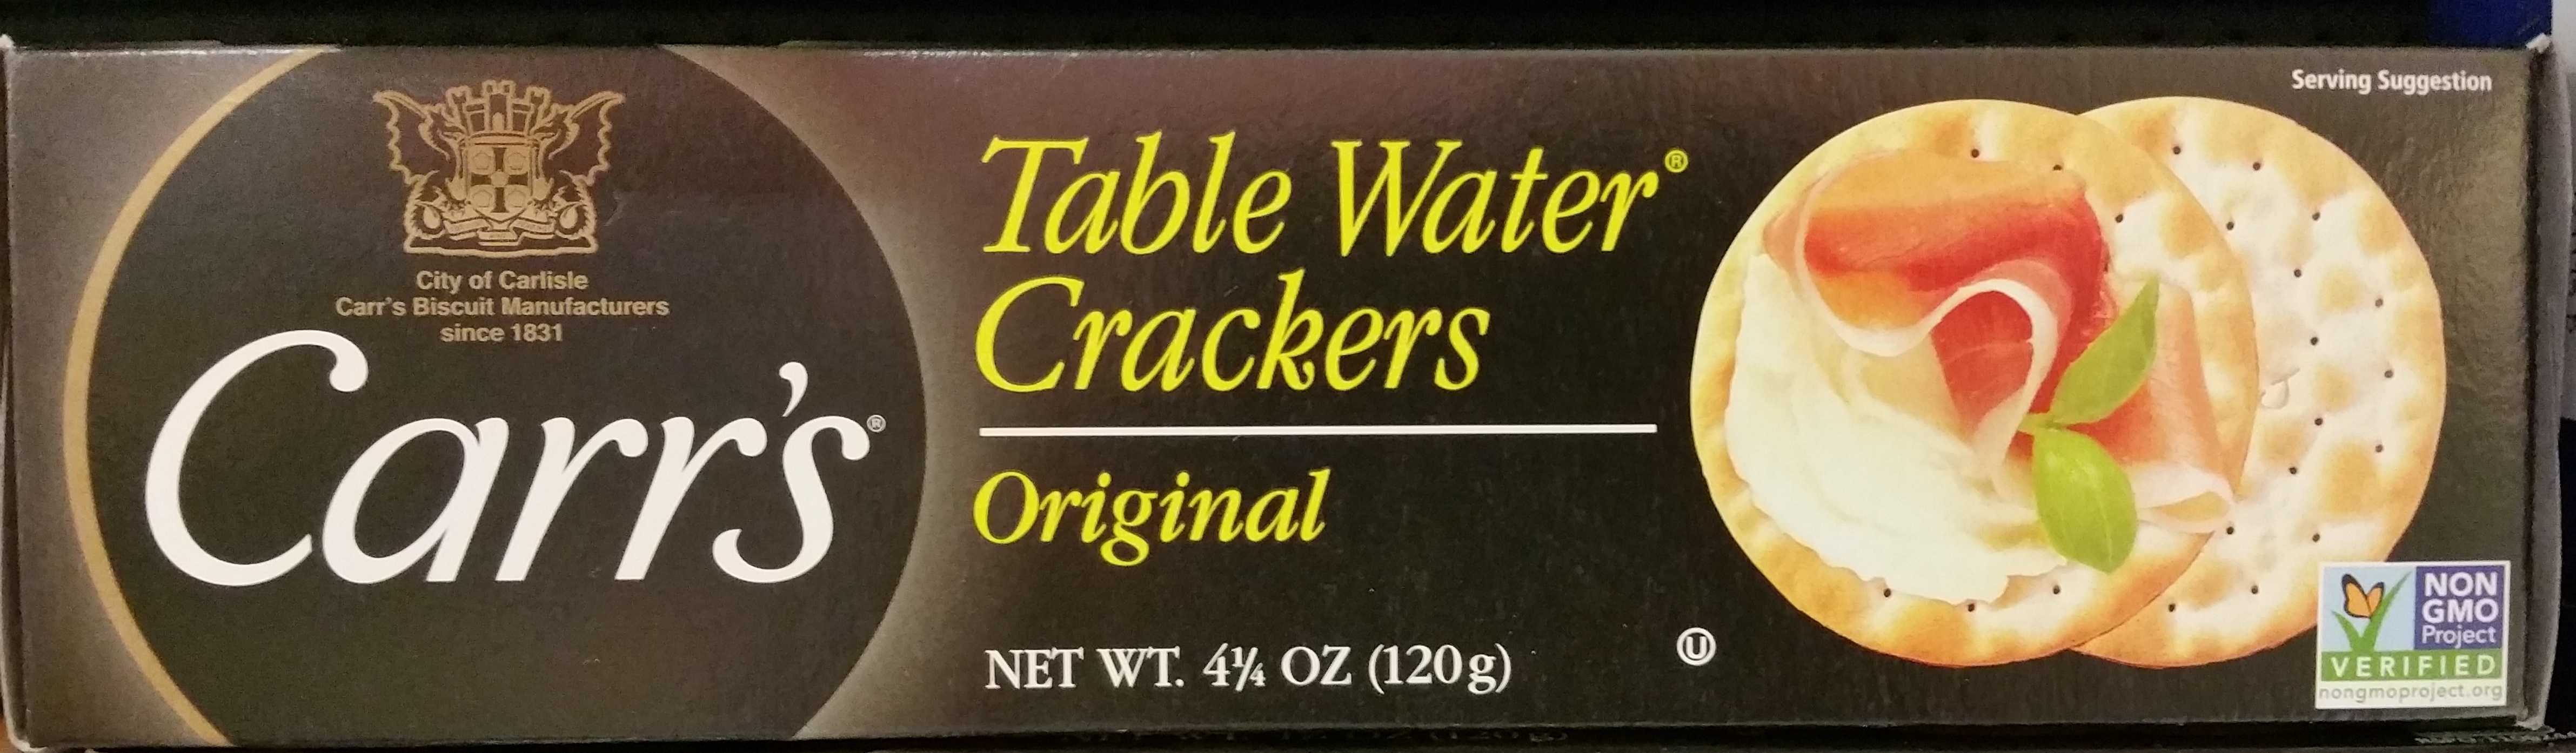 Table Water Crackers original - Product - en